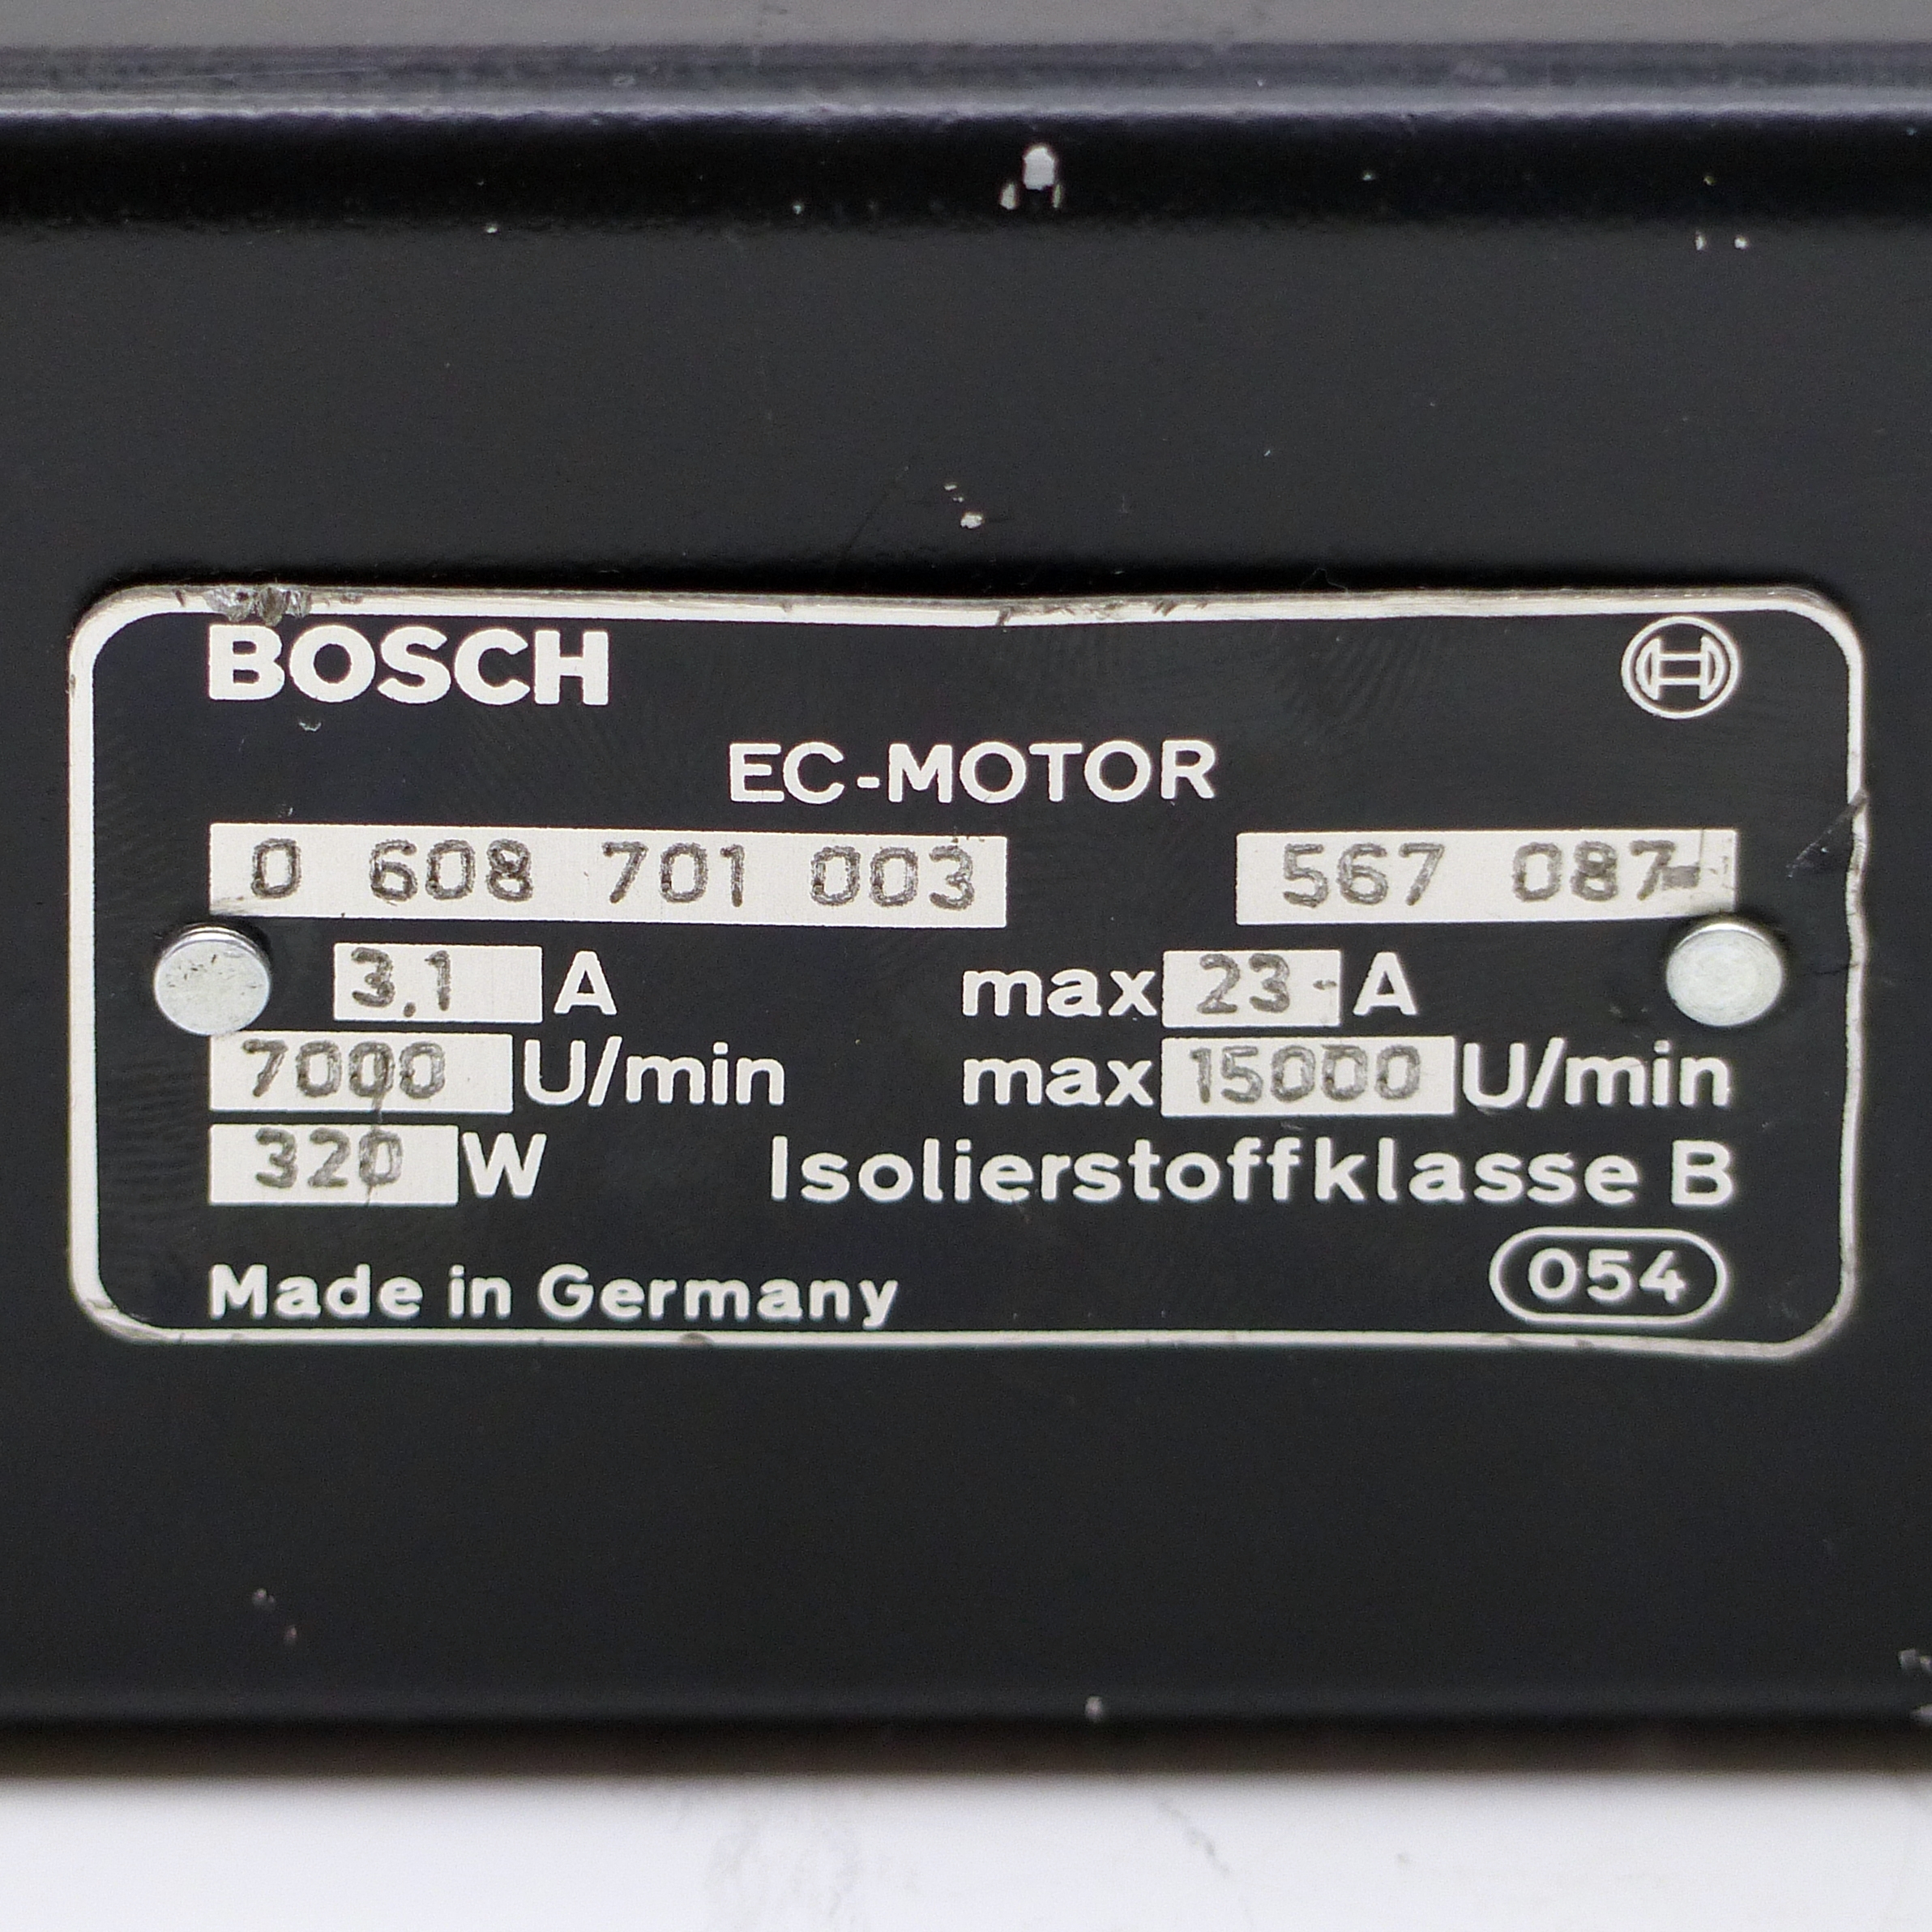 EC-Motor 0608701003 